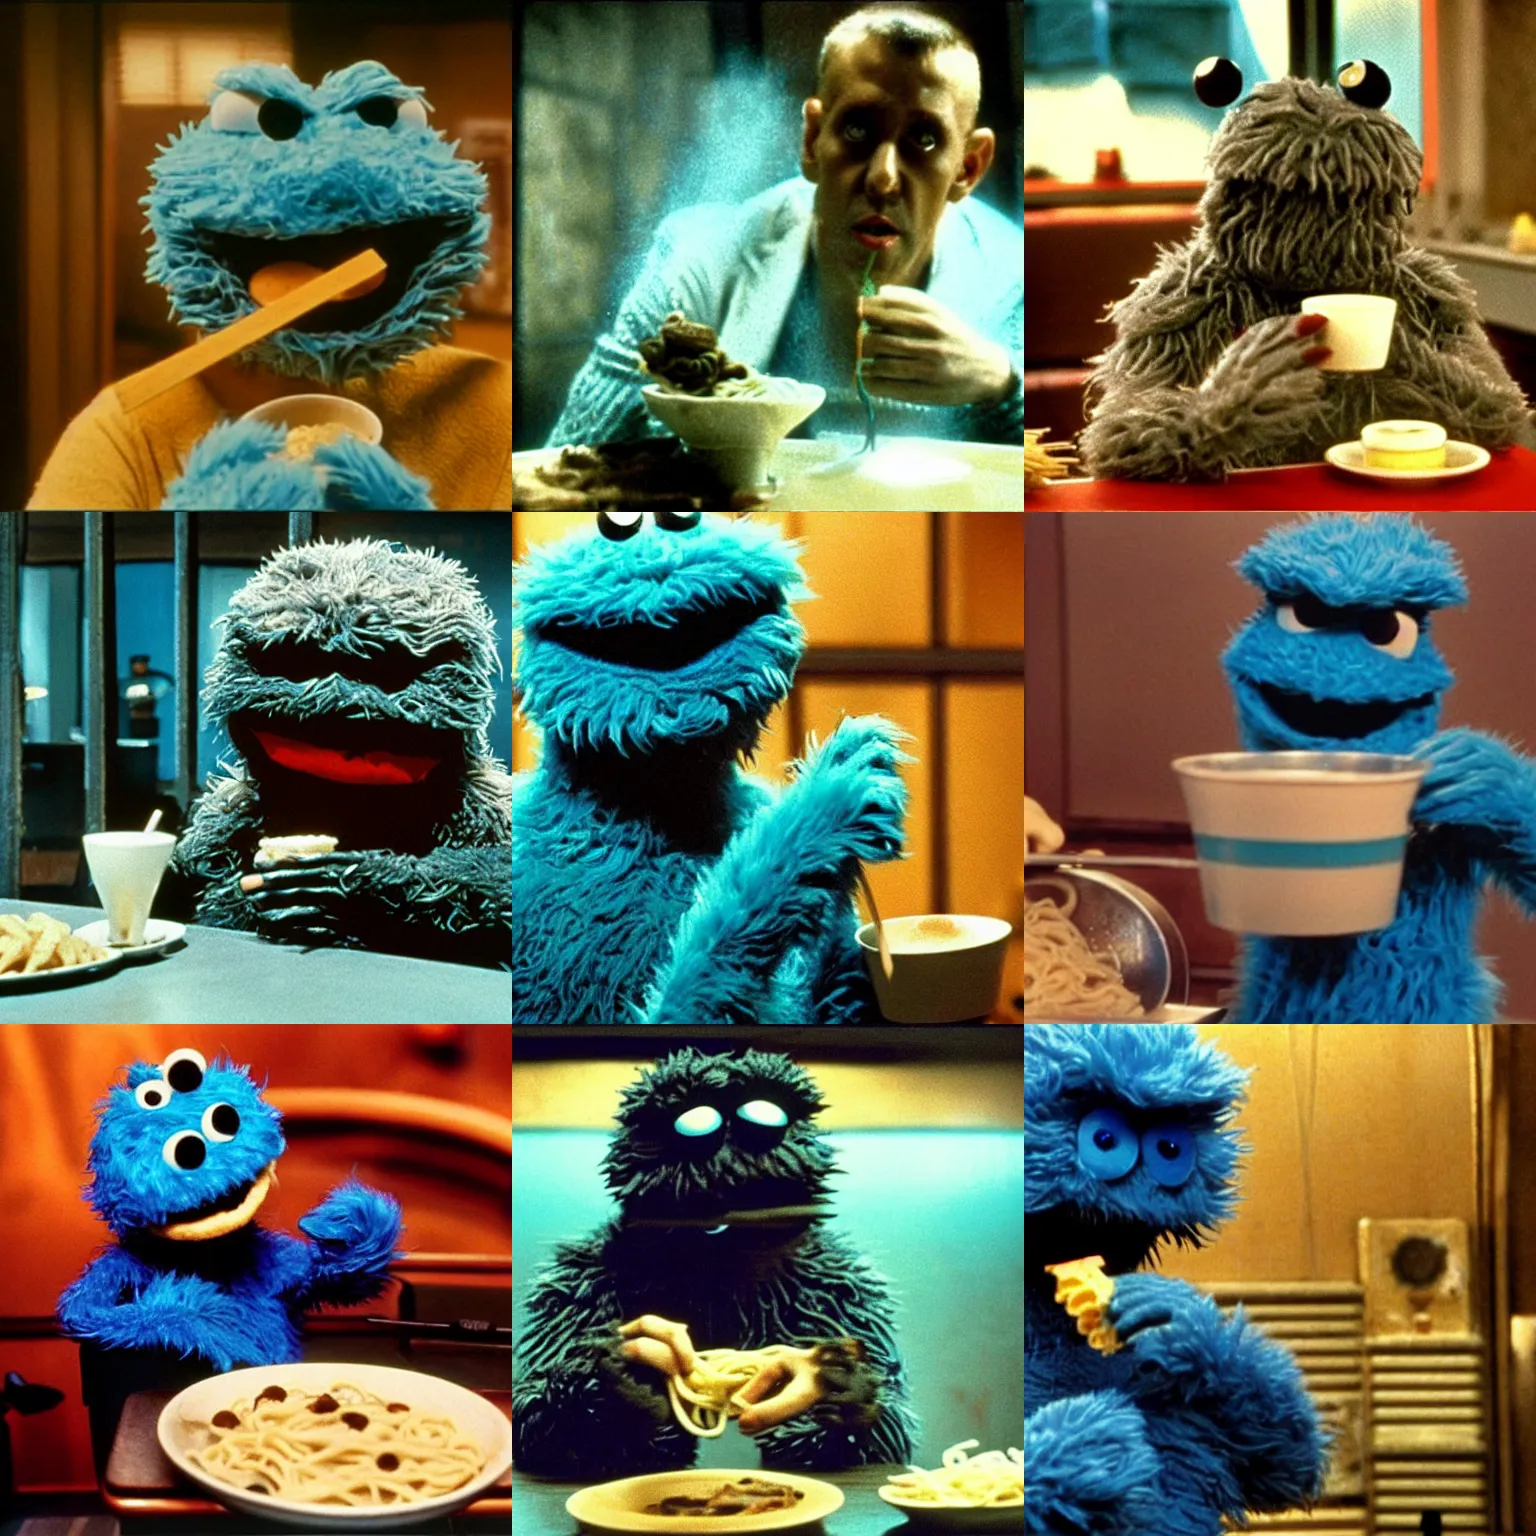 Prompt: Cookie Monster eating noodles, Still from Blade Runner (1982)